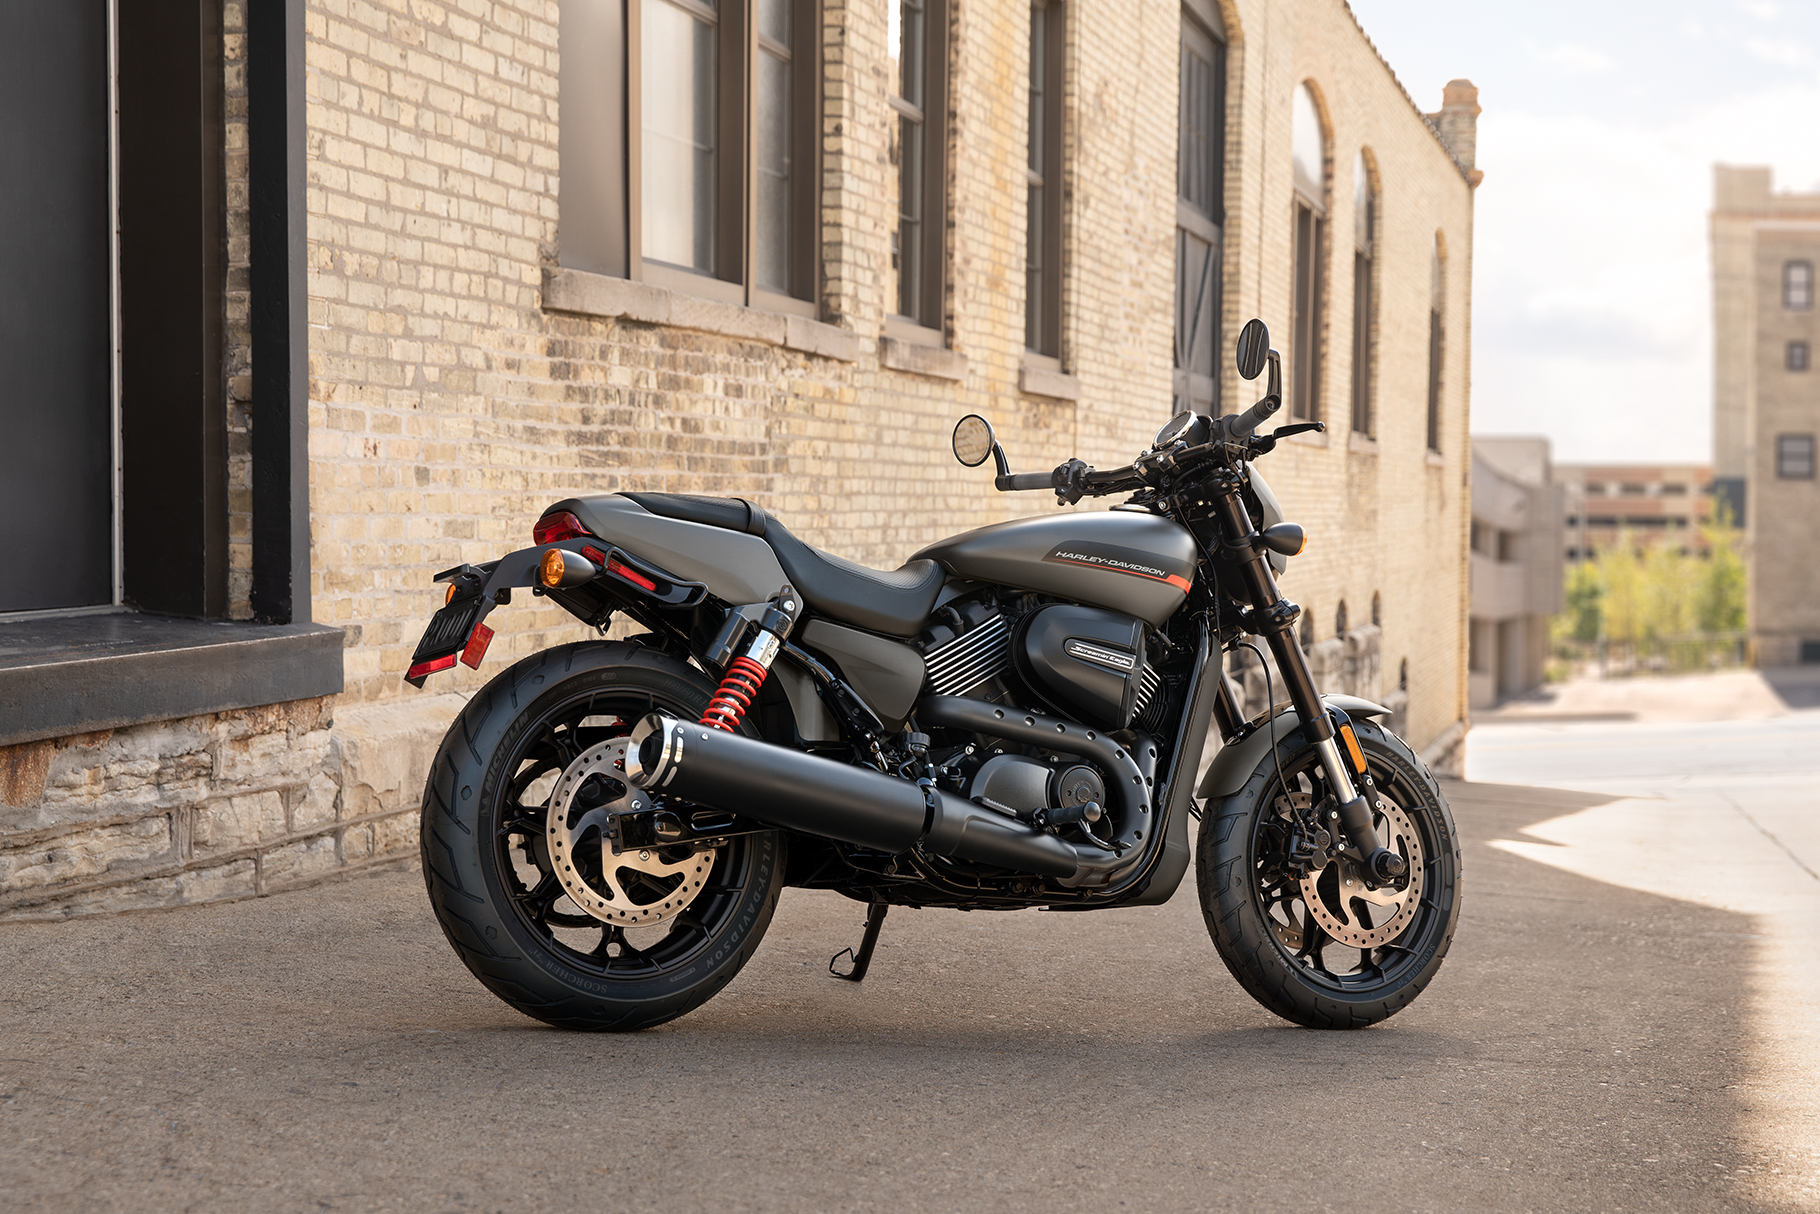 2019 Street Rod Motorcycle  Harley Davidson  India